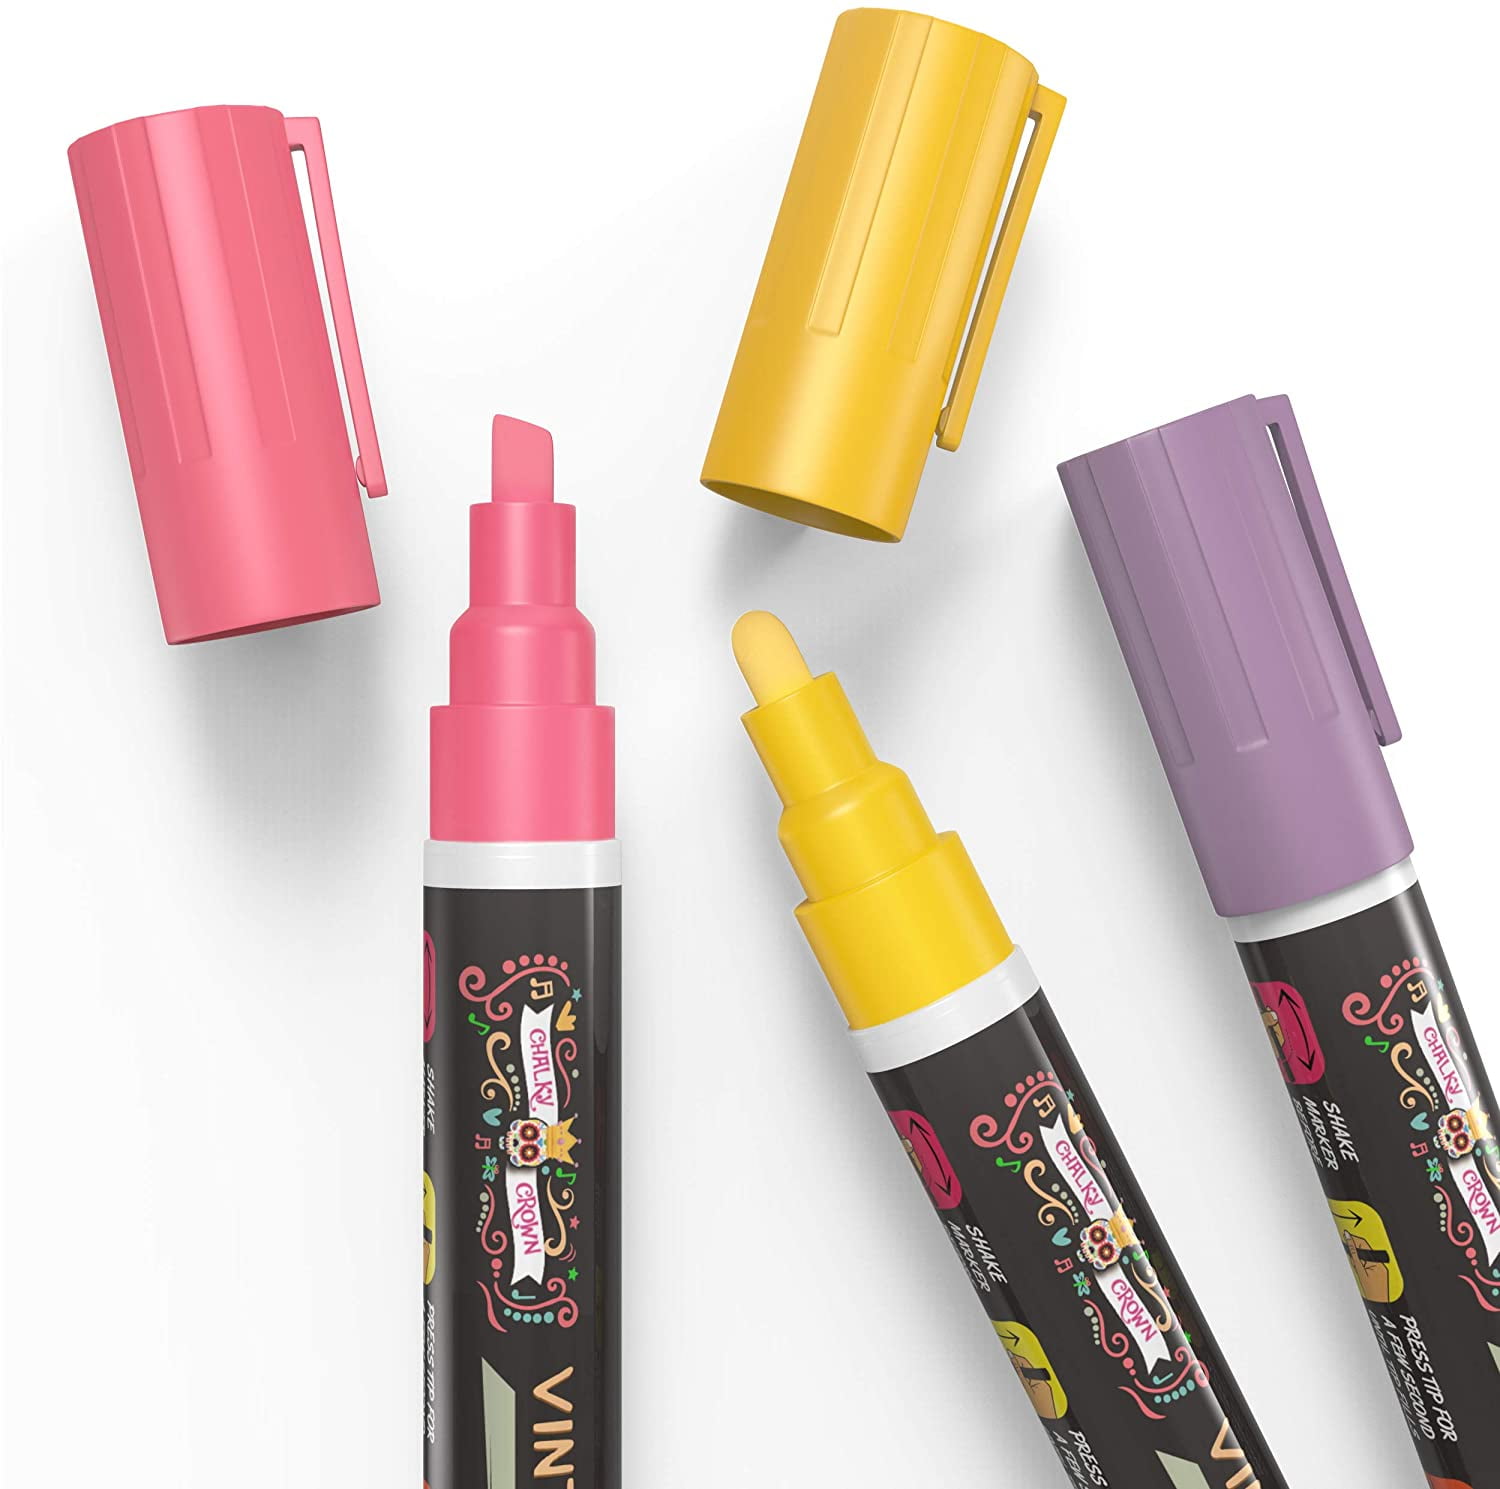 Xmmswdla Bold Chalk Markers - Dry Erase Marker Pens - Liquid Chalk Markers for Chalkboards, Signs, Windows, Blackboard, Glass, Mirrors - Chalkboard